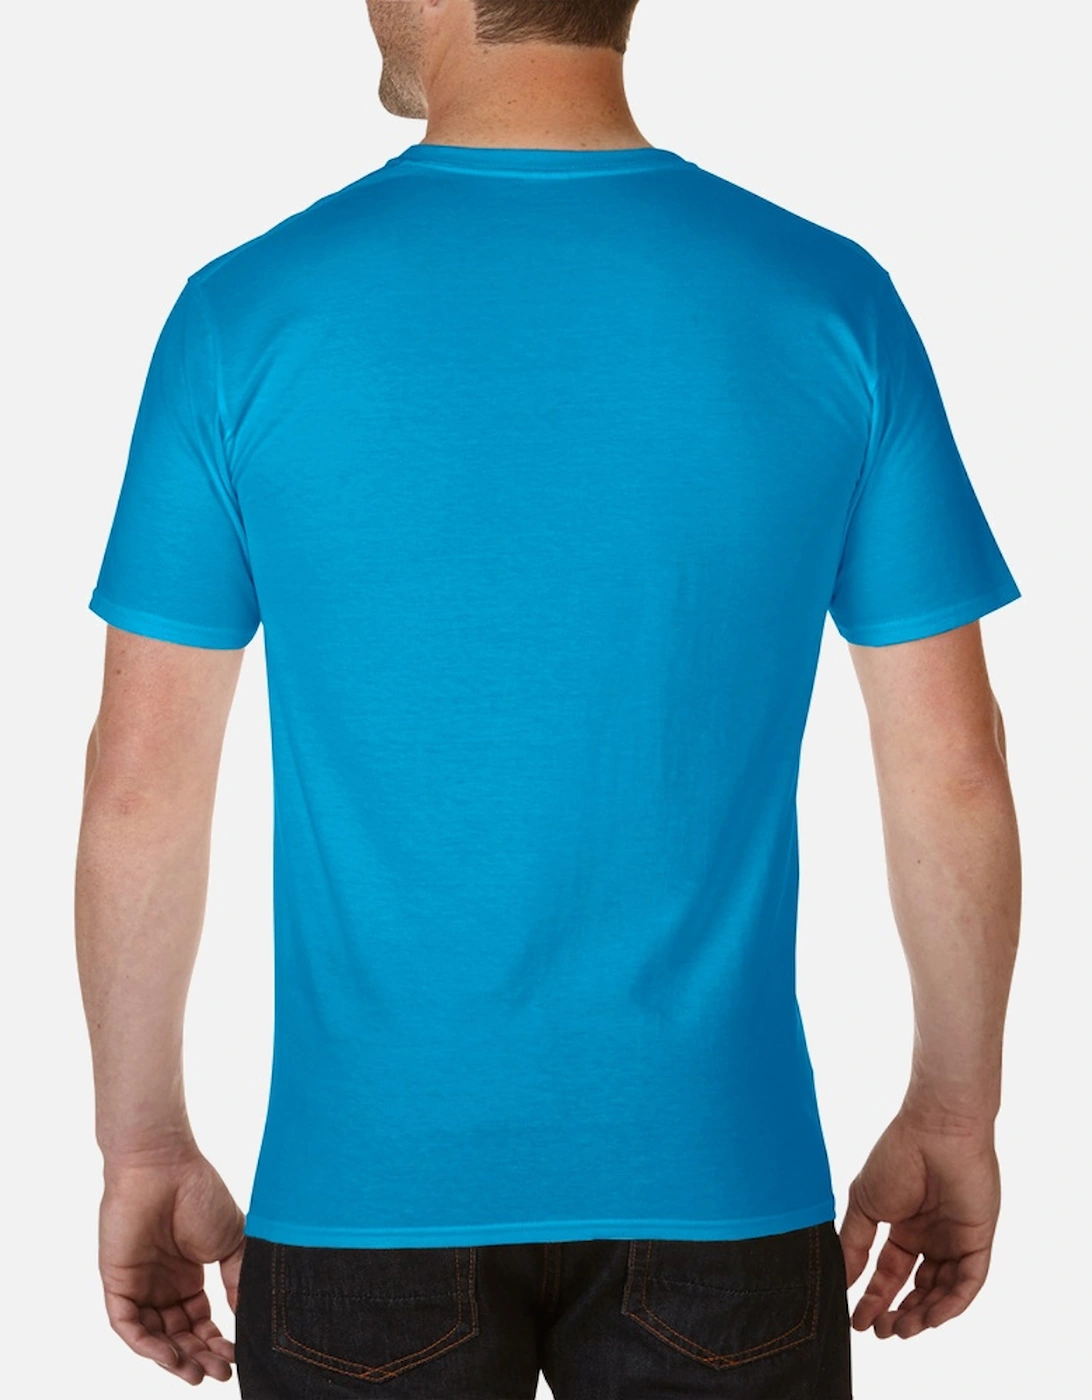 Mens Premium Cotton V Neck Short Sleeve T-Shirt